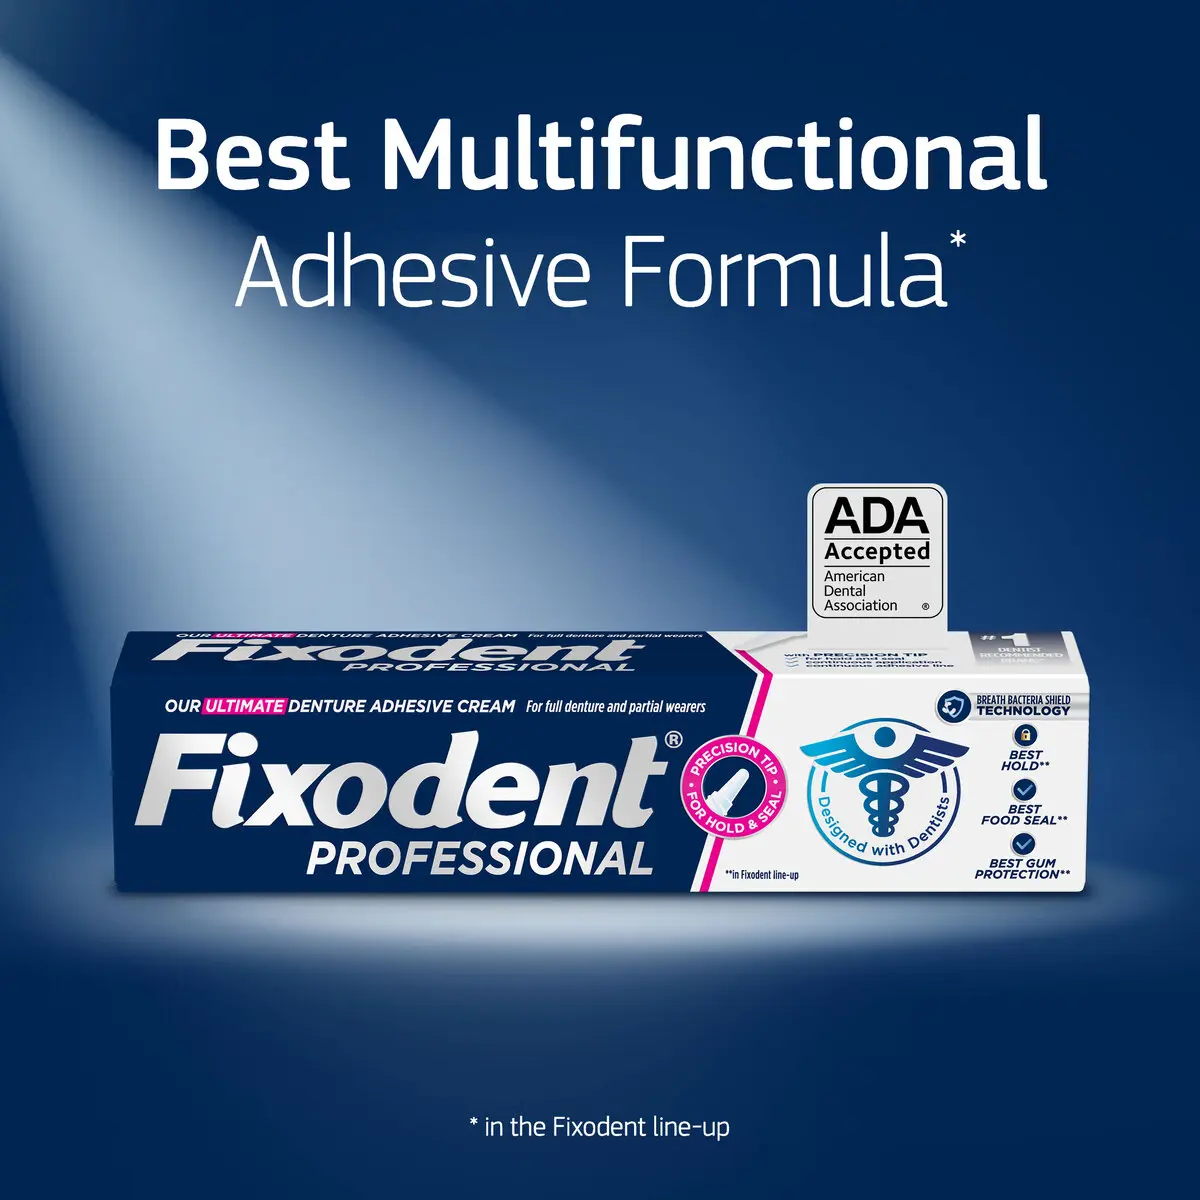 Fixodent Professional - Best multifunctional adhesive formula